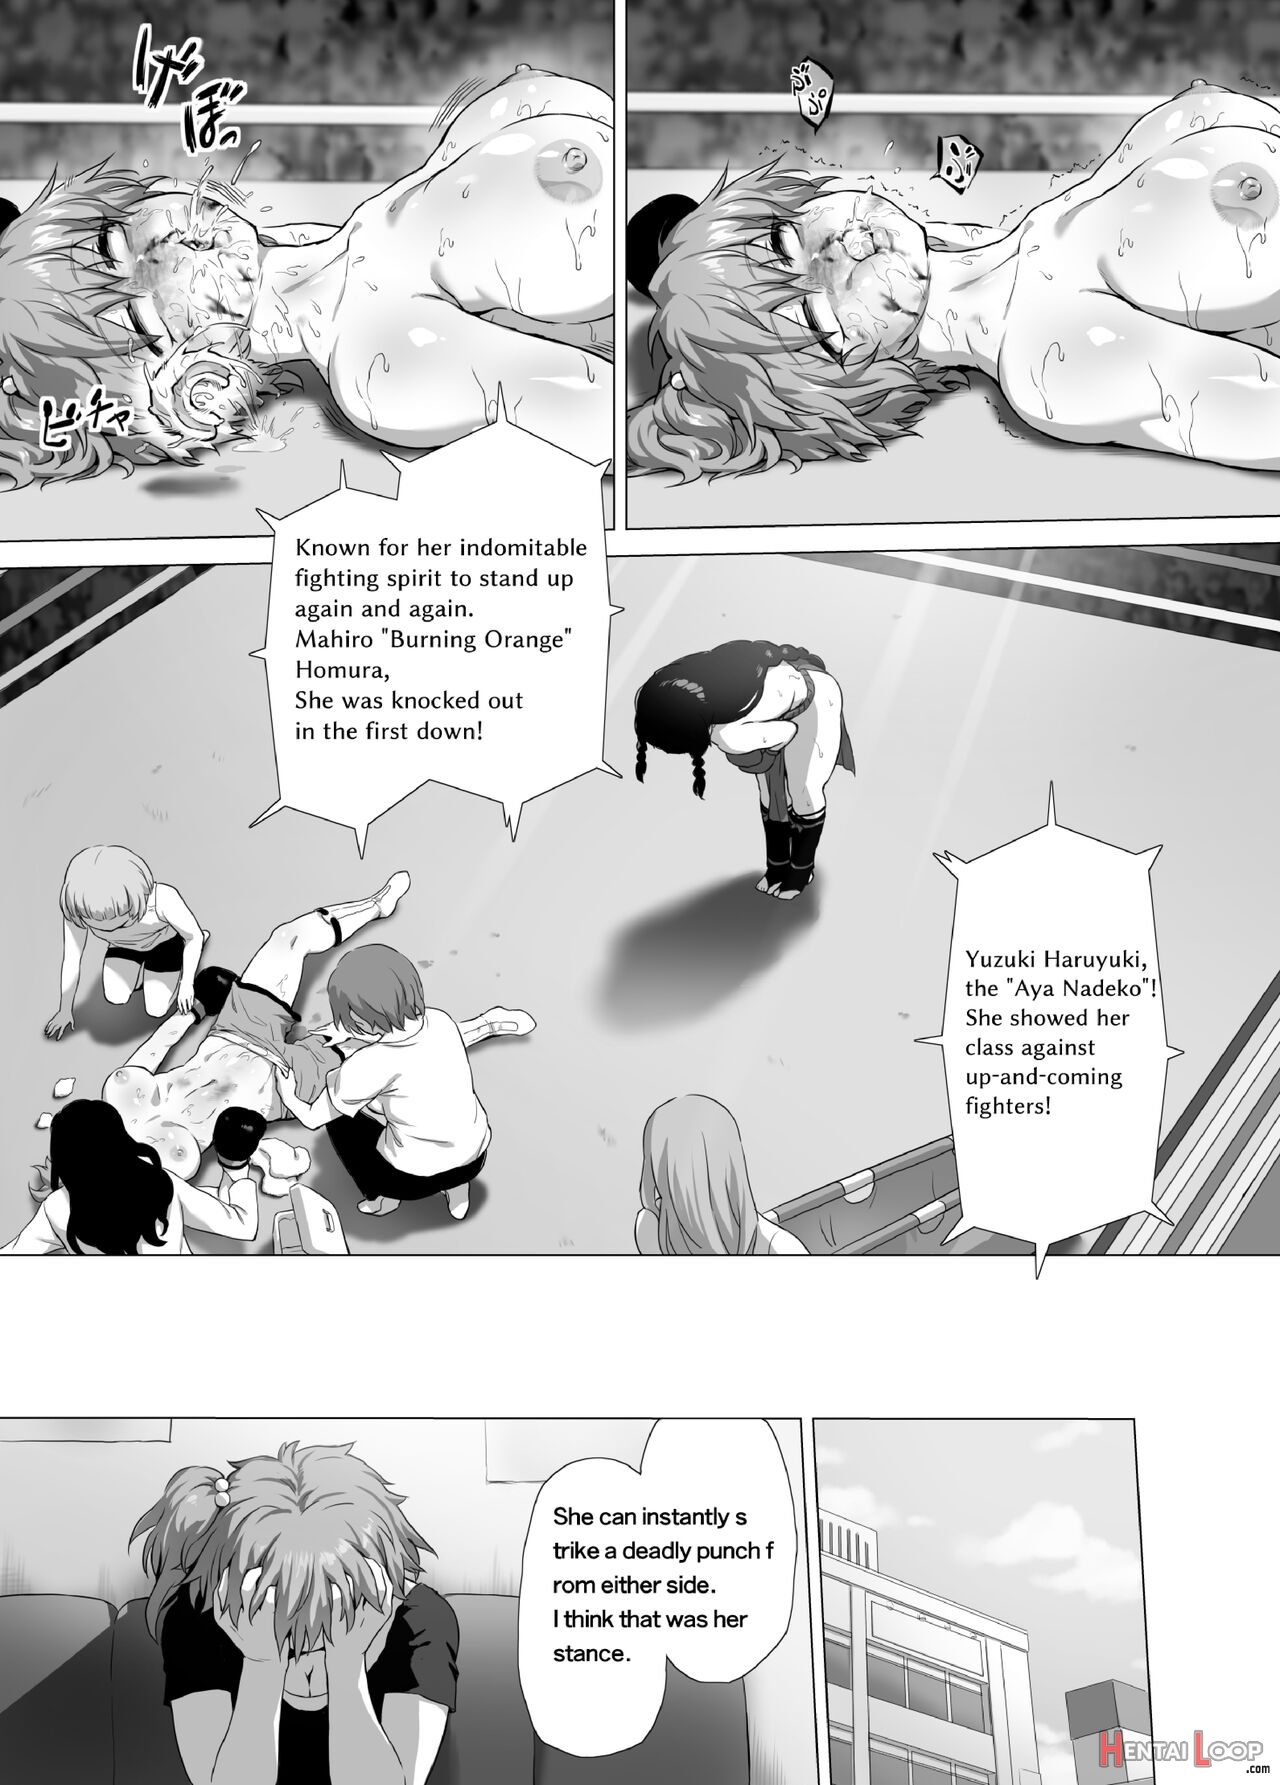 Mahiro Standup! Manga Ver. ~an New Foe Appears! Meet The Lovely Yuzuki~ page 12